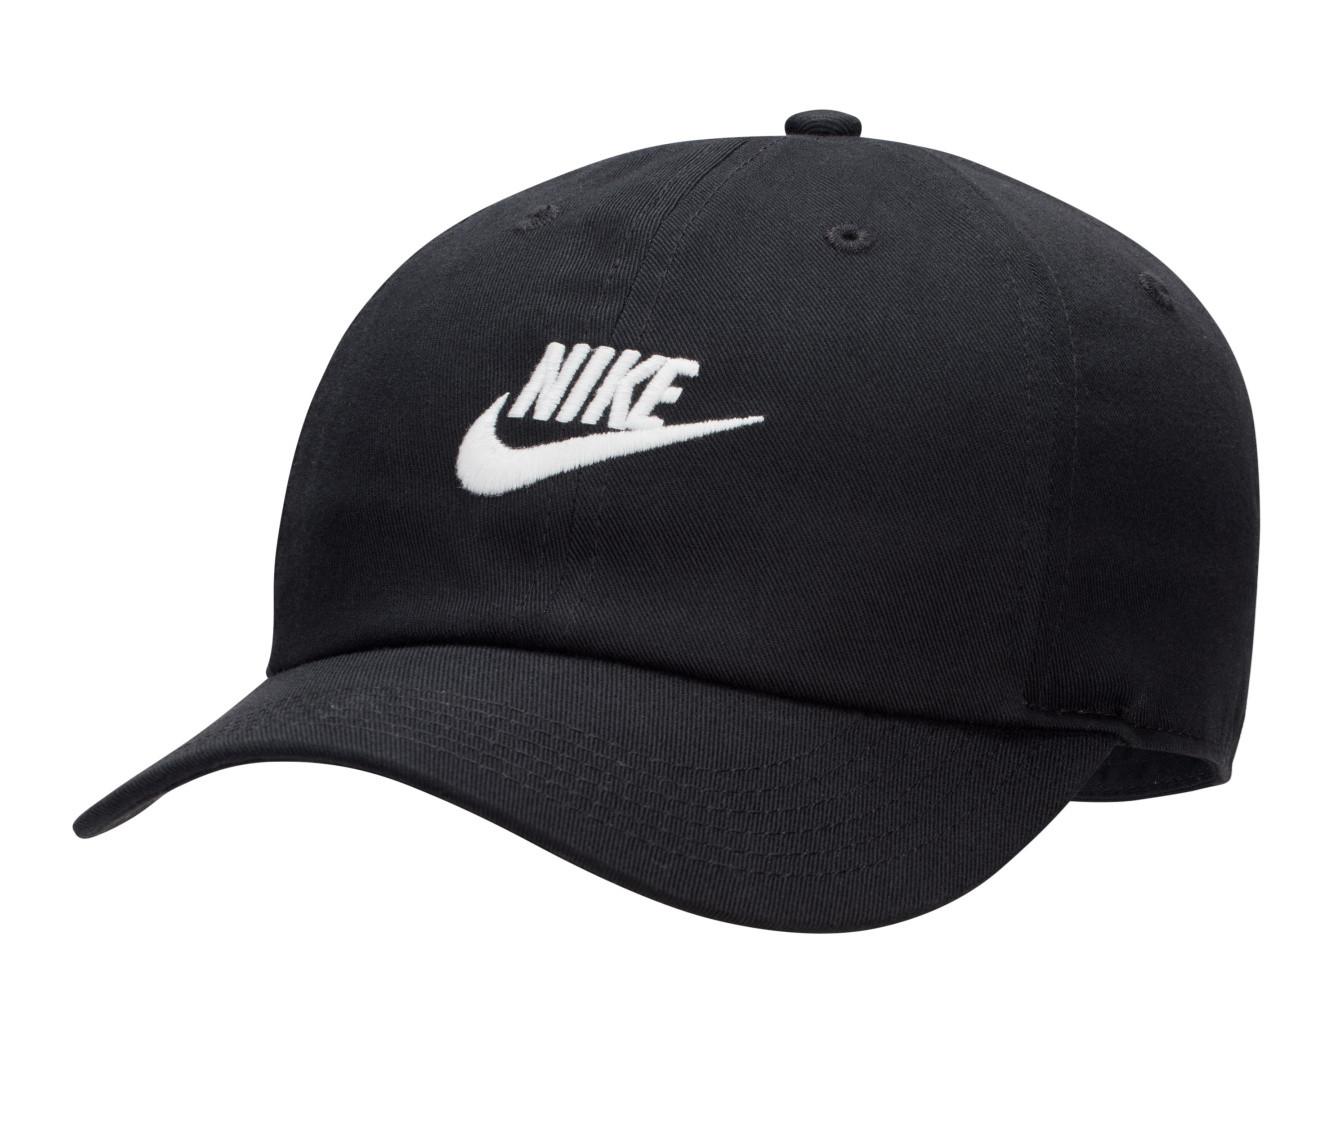 Nike Youth Futura Ball Cap